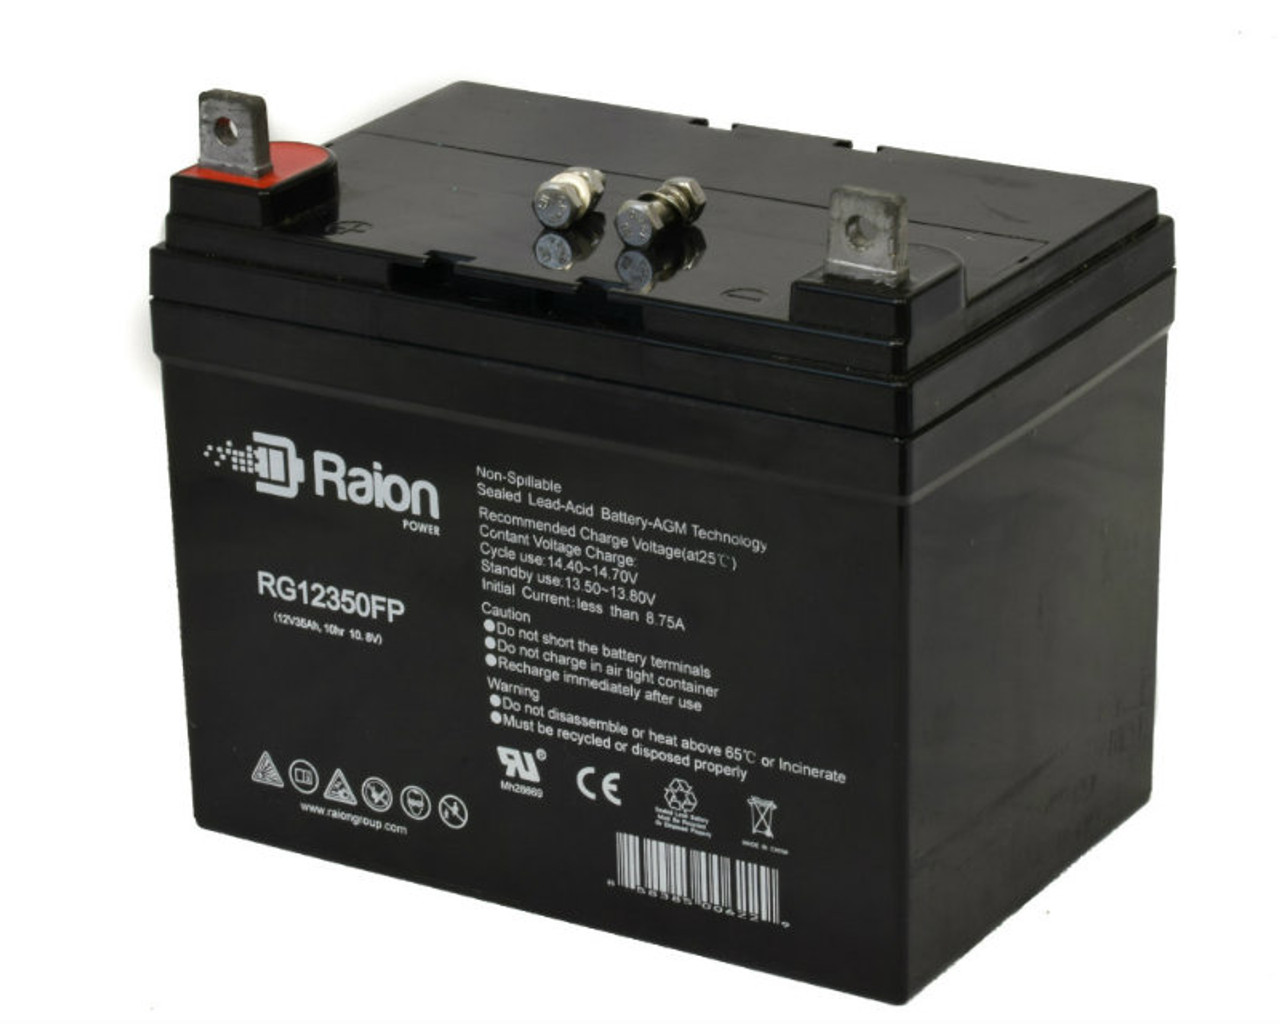 Raion Power Replacement 12V 35Ah RG12350FP Battery for Dixie Chopper 5020